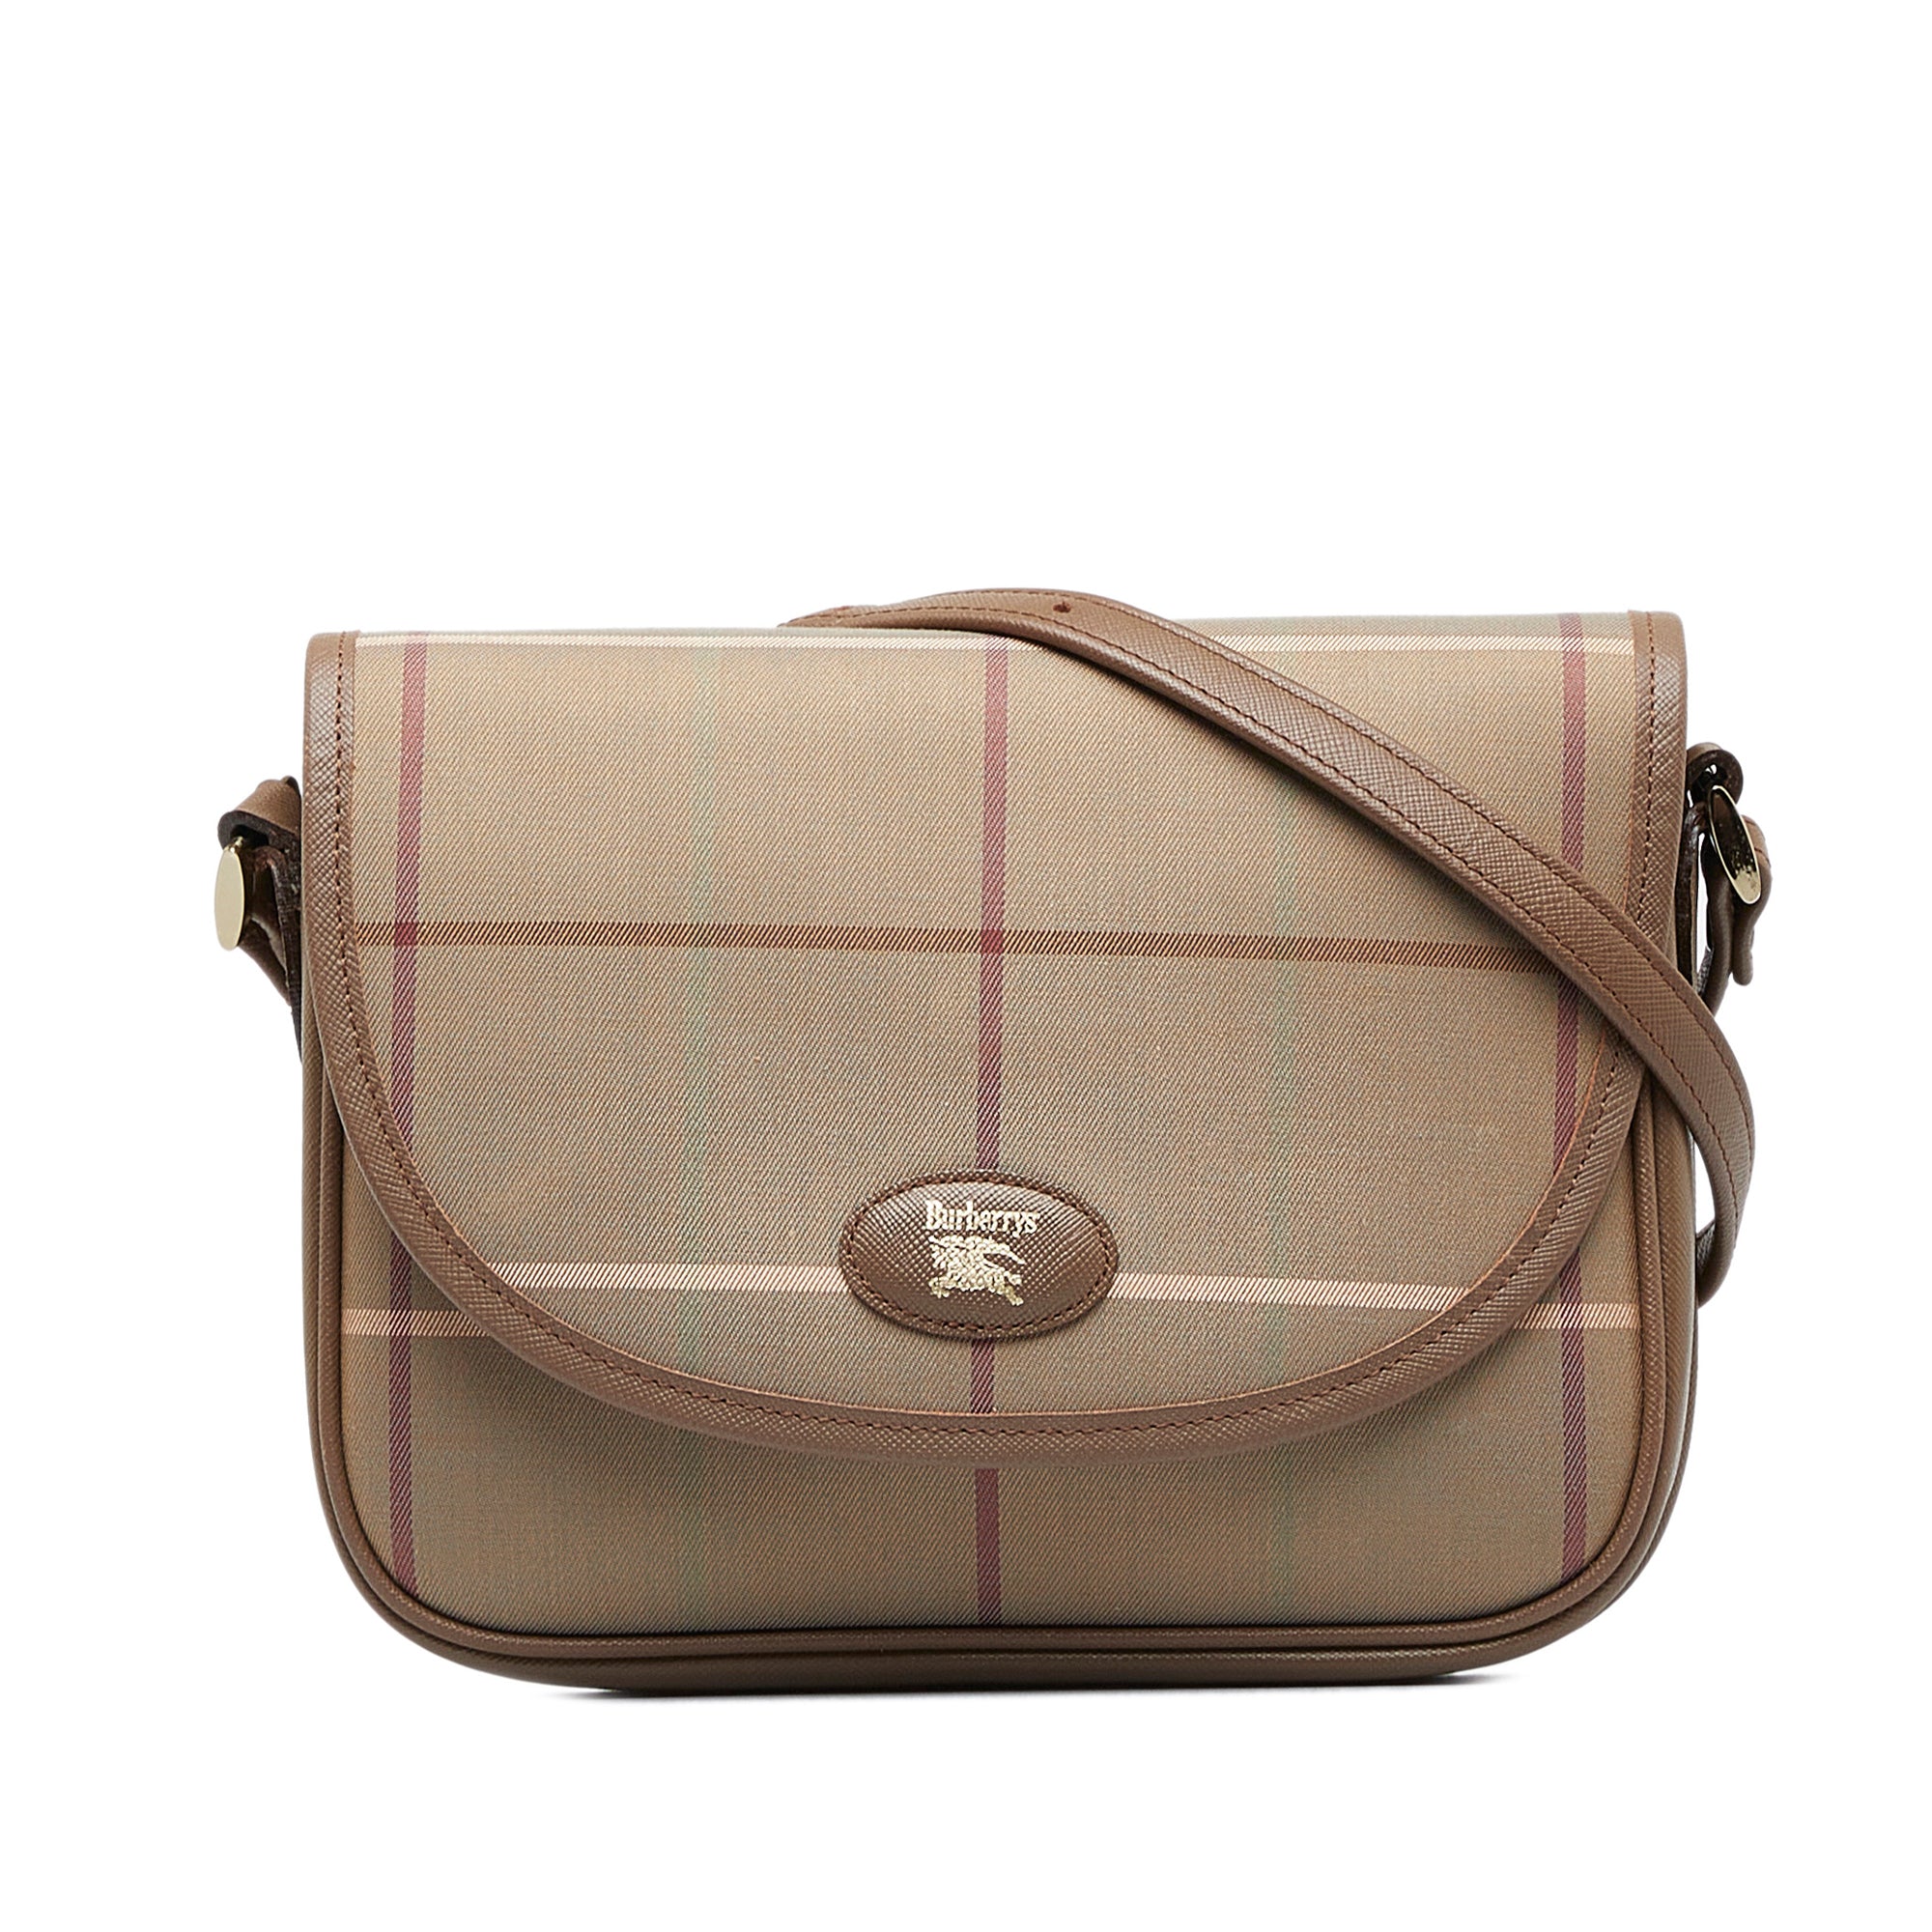 Salvatore Ferragamo Crossbody Bags & Handbags for Women for sale | eBay